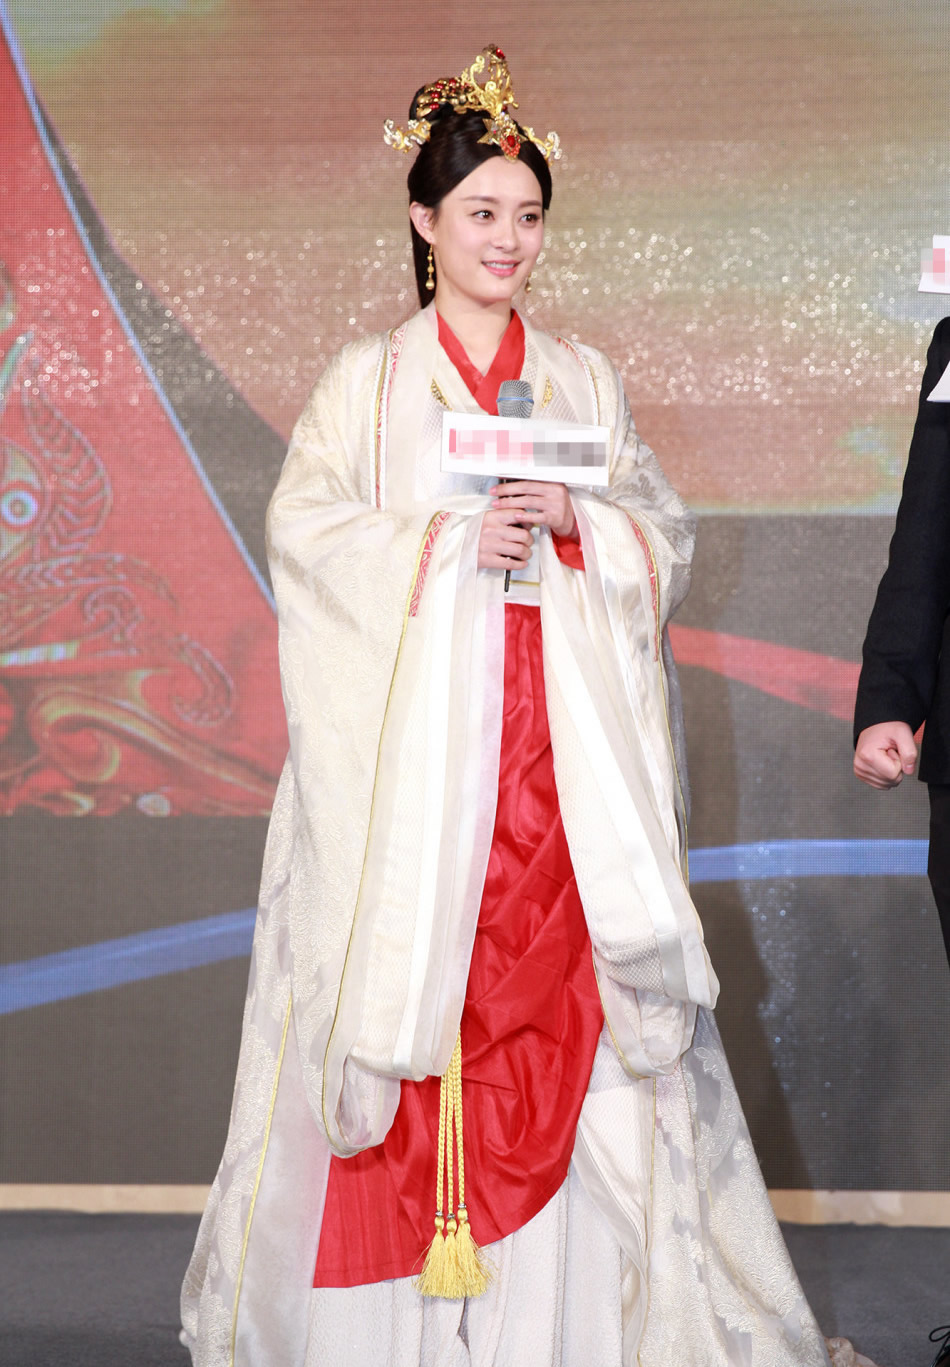 Chinese Traditional Empress Costumes Hanfu Dresses Asian Fashion